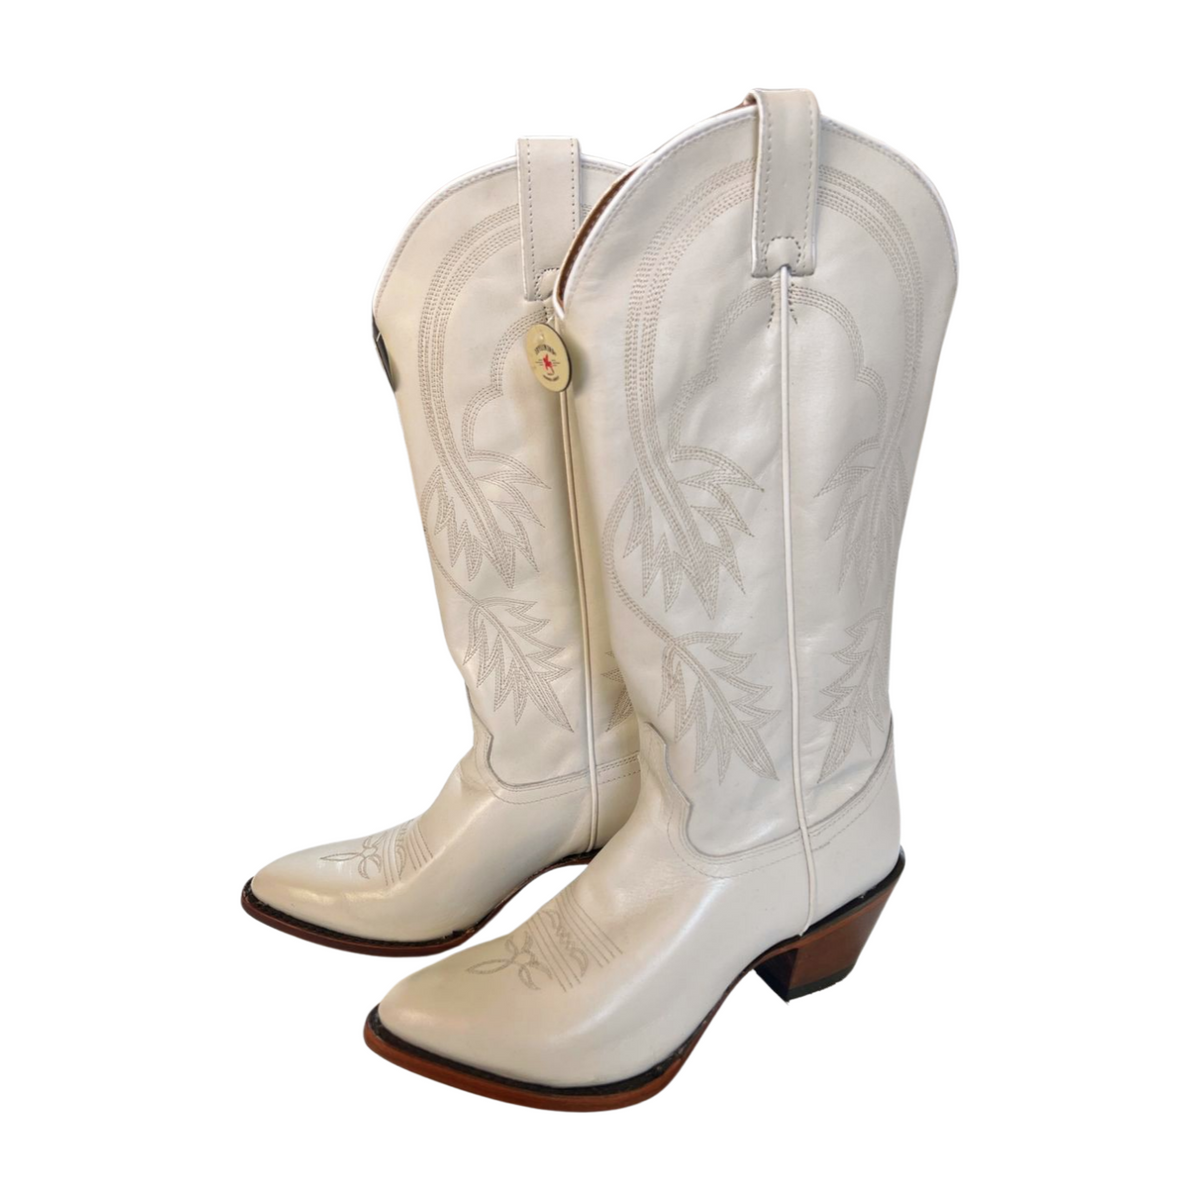 Boot Barn- White/Cream Cowgirl Boots